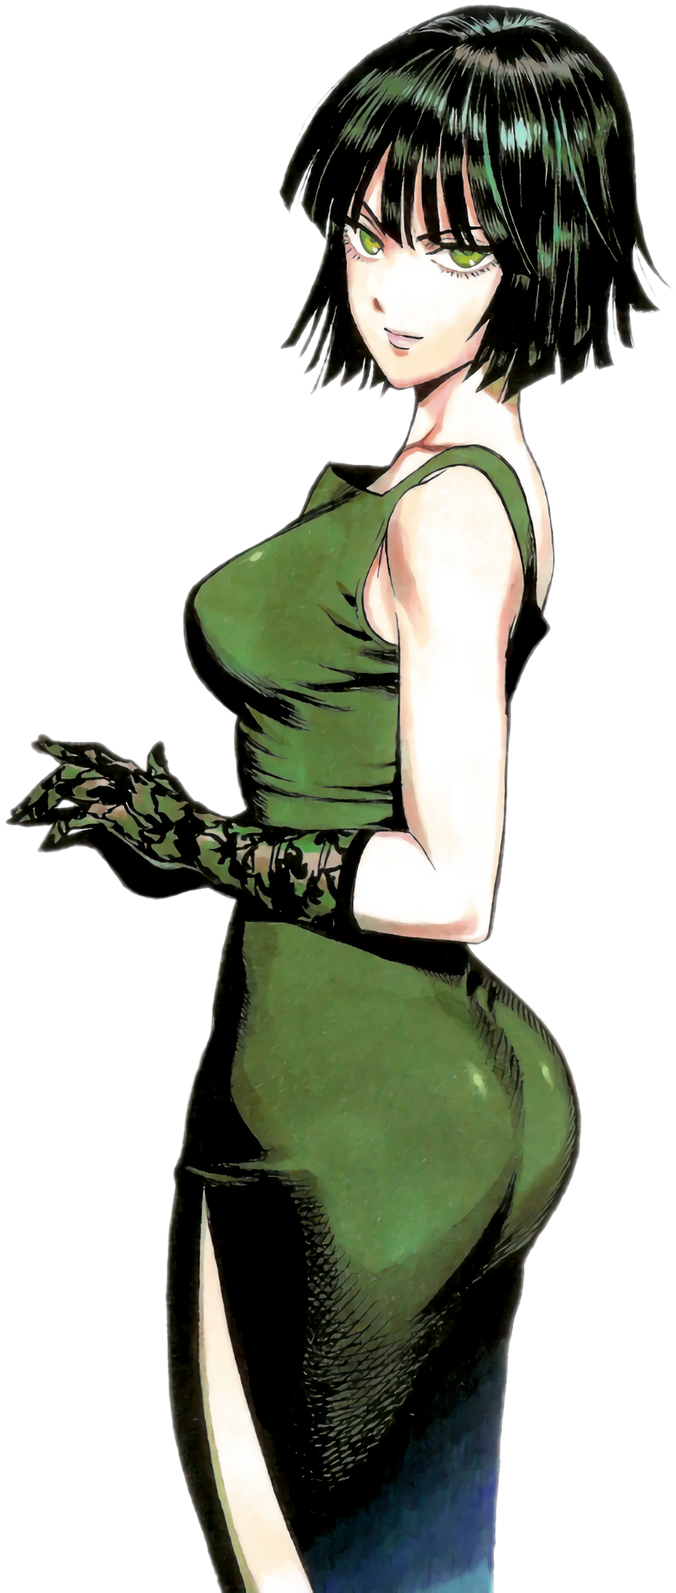 A Cartoon Of A Woman In A Green Dress